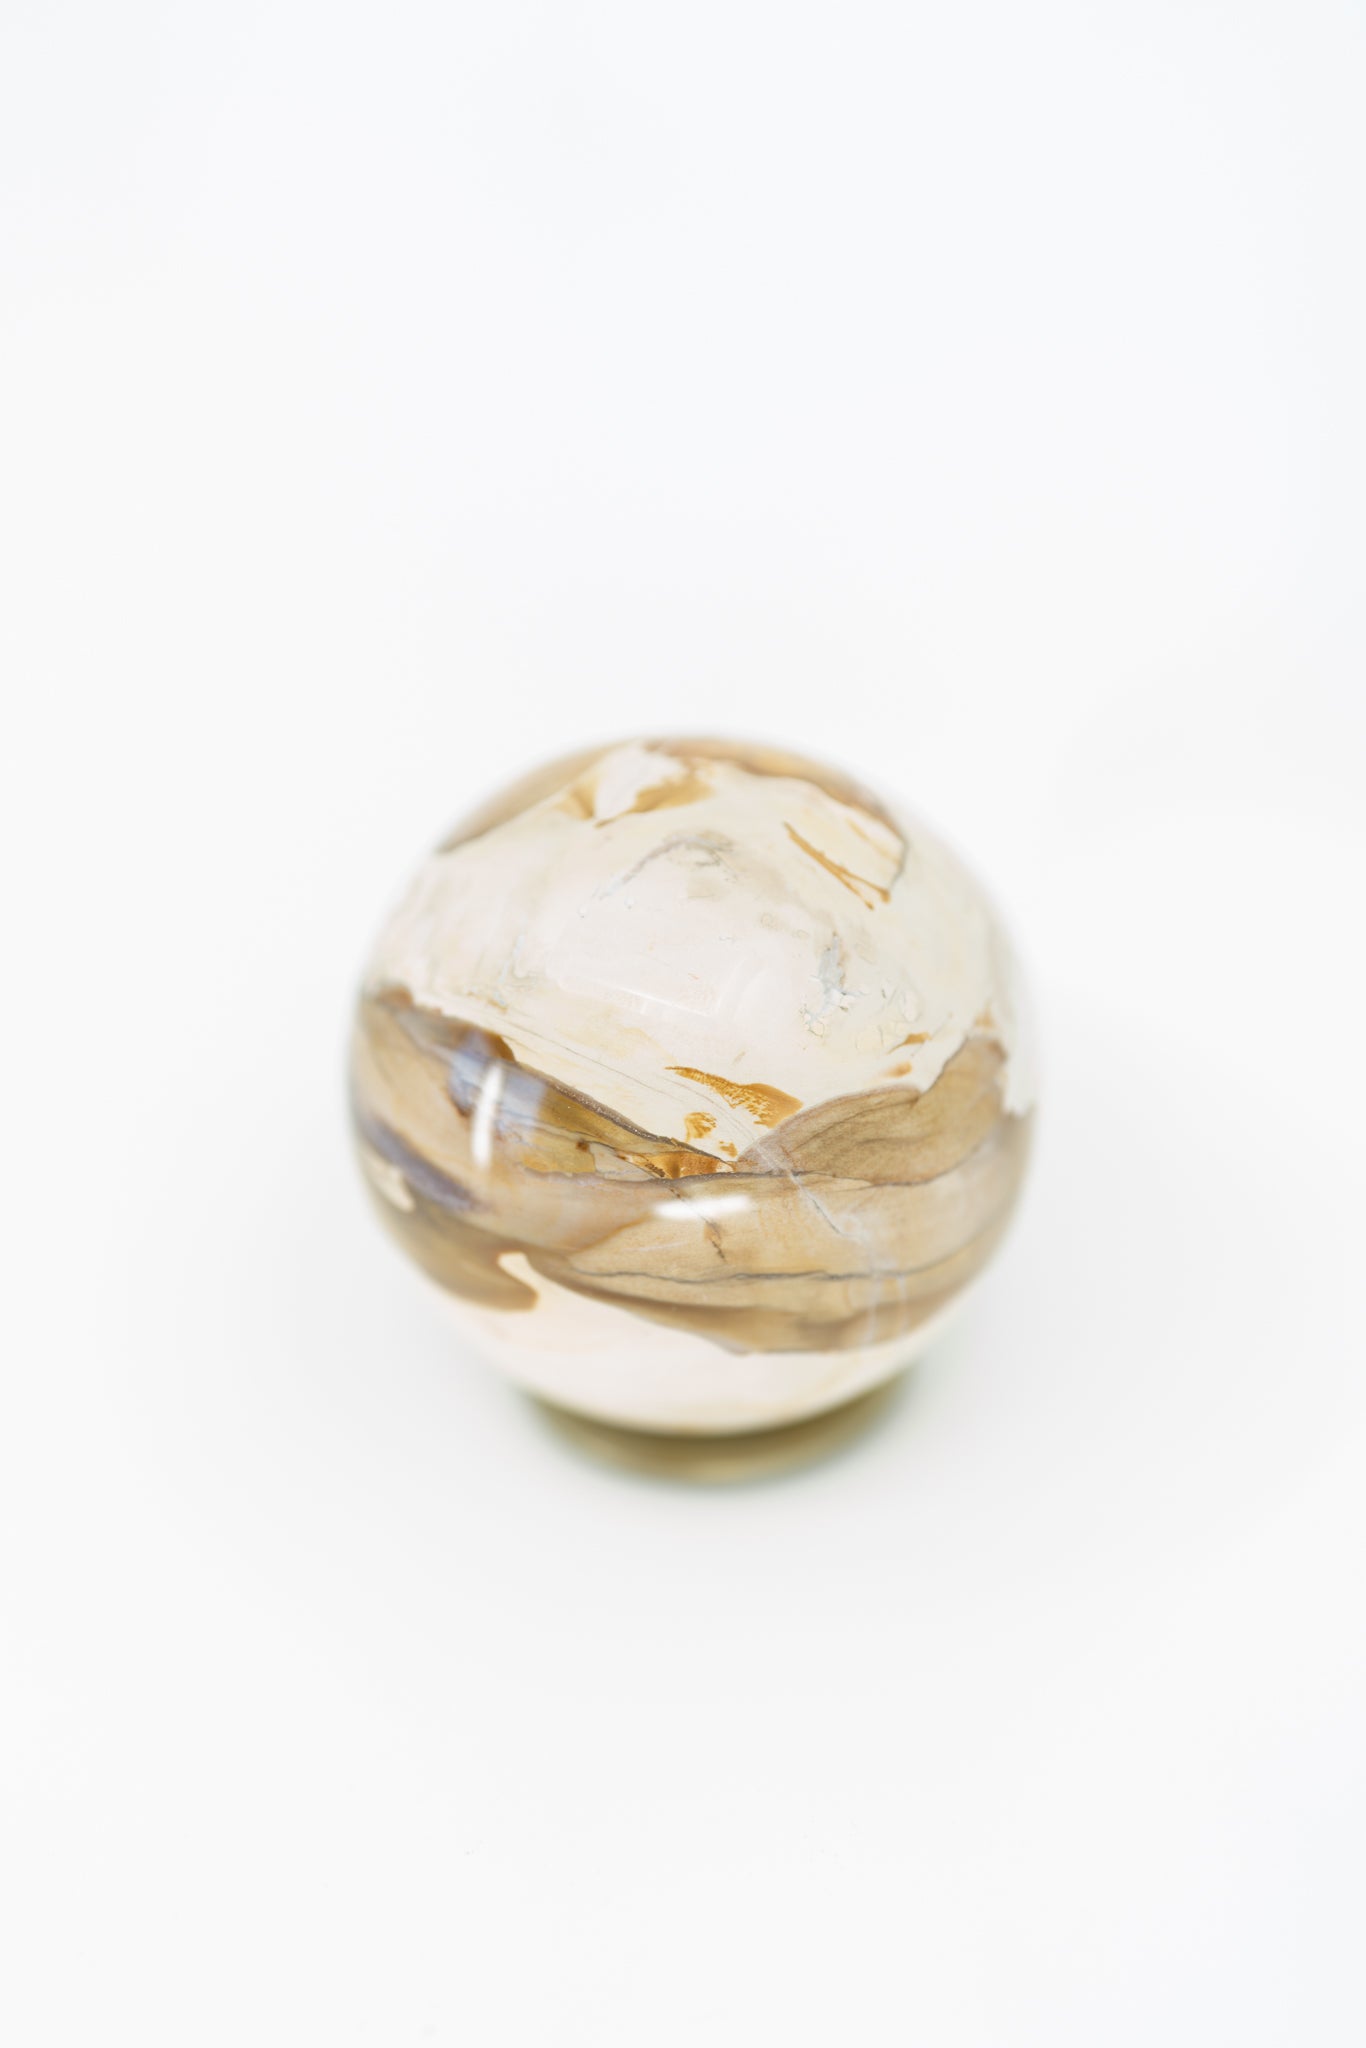 Petrified Wood Sphere